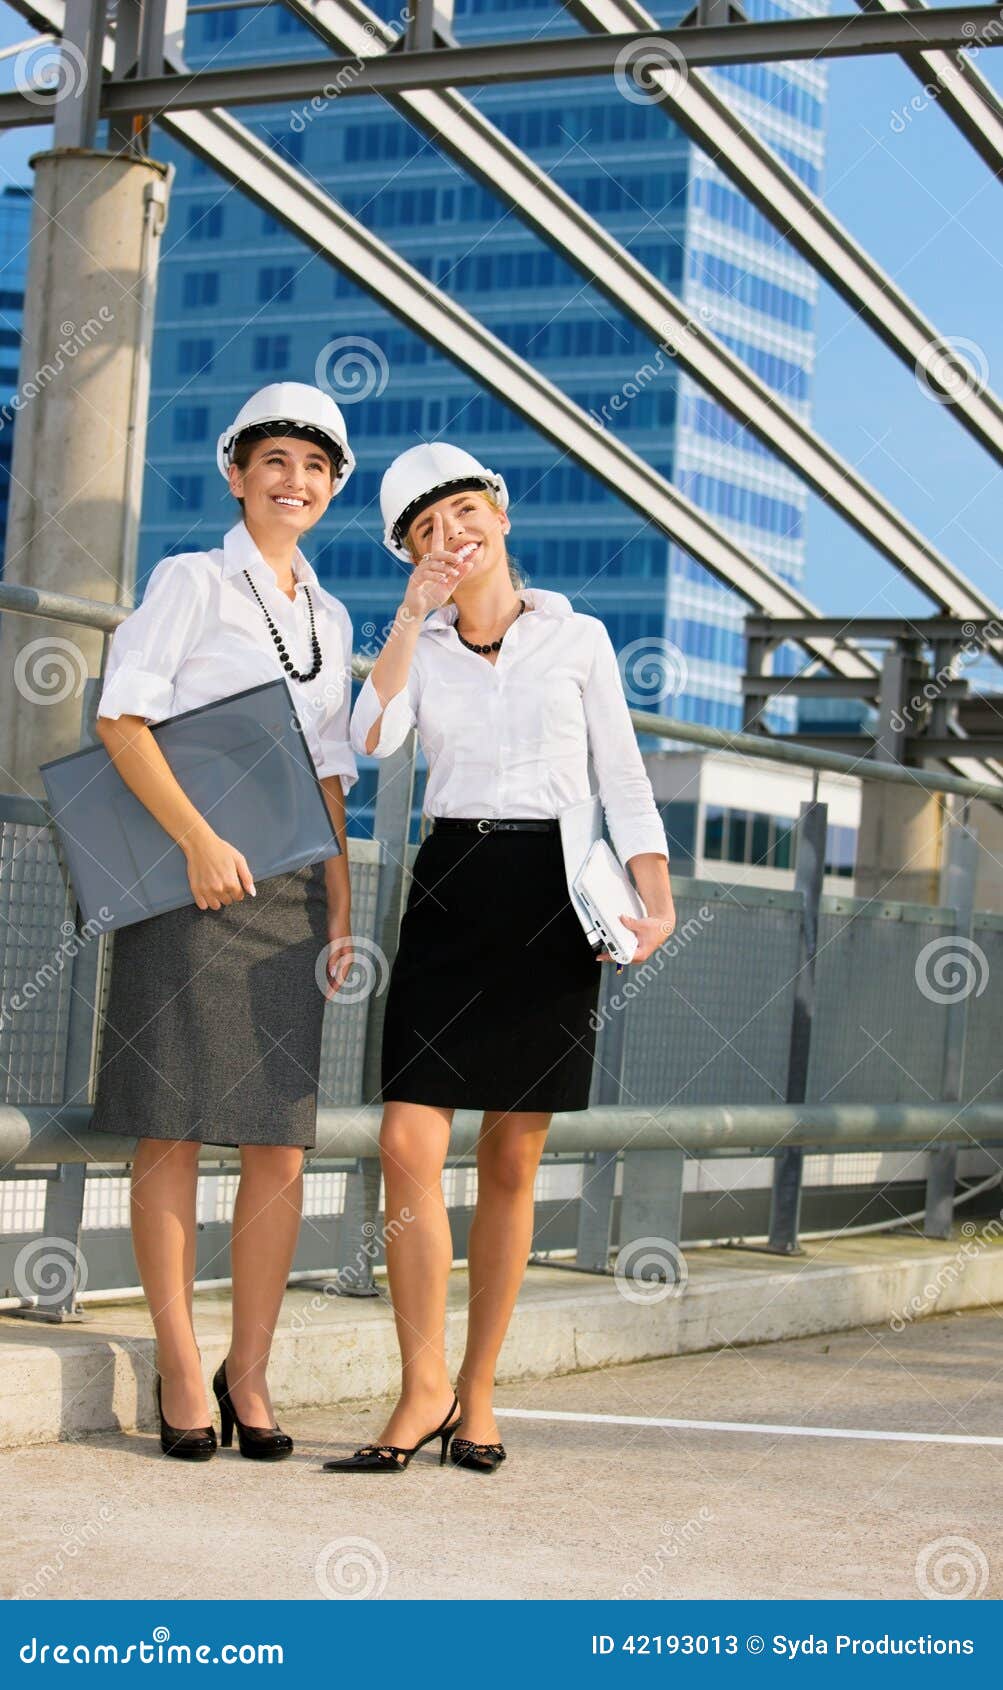 Young contractors stock image. Image of ladies, energetic - 42193013